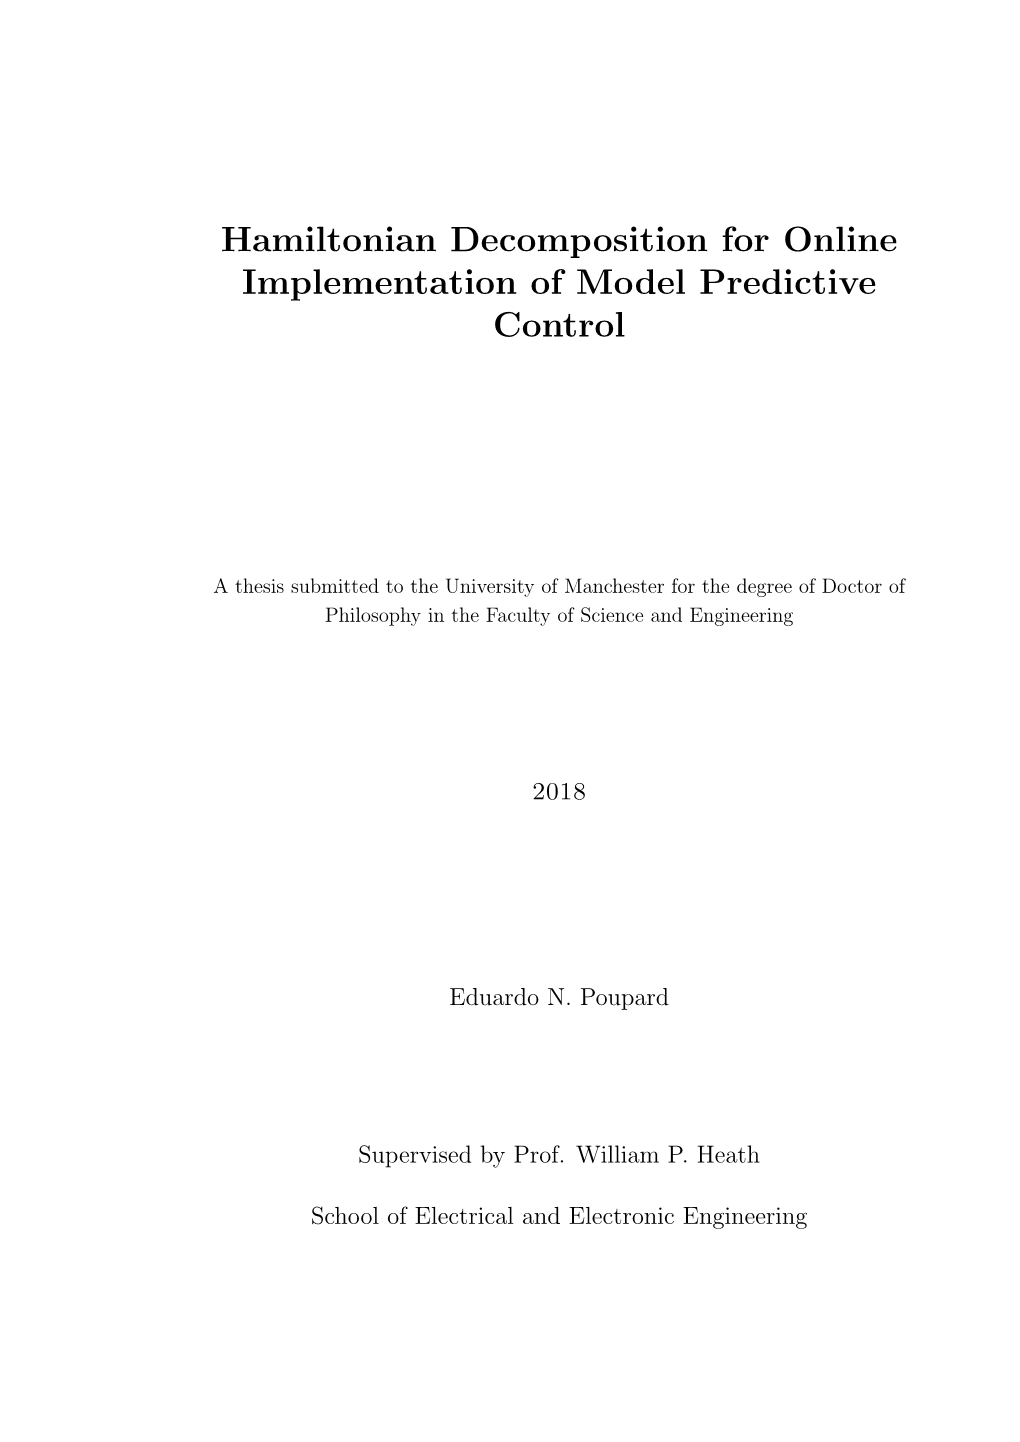 Hamiltonian Decomposition for Online Implementation of Model Predictive Control